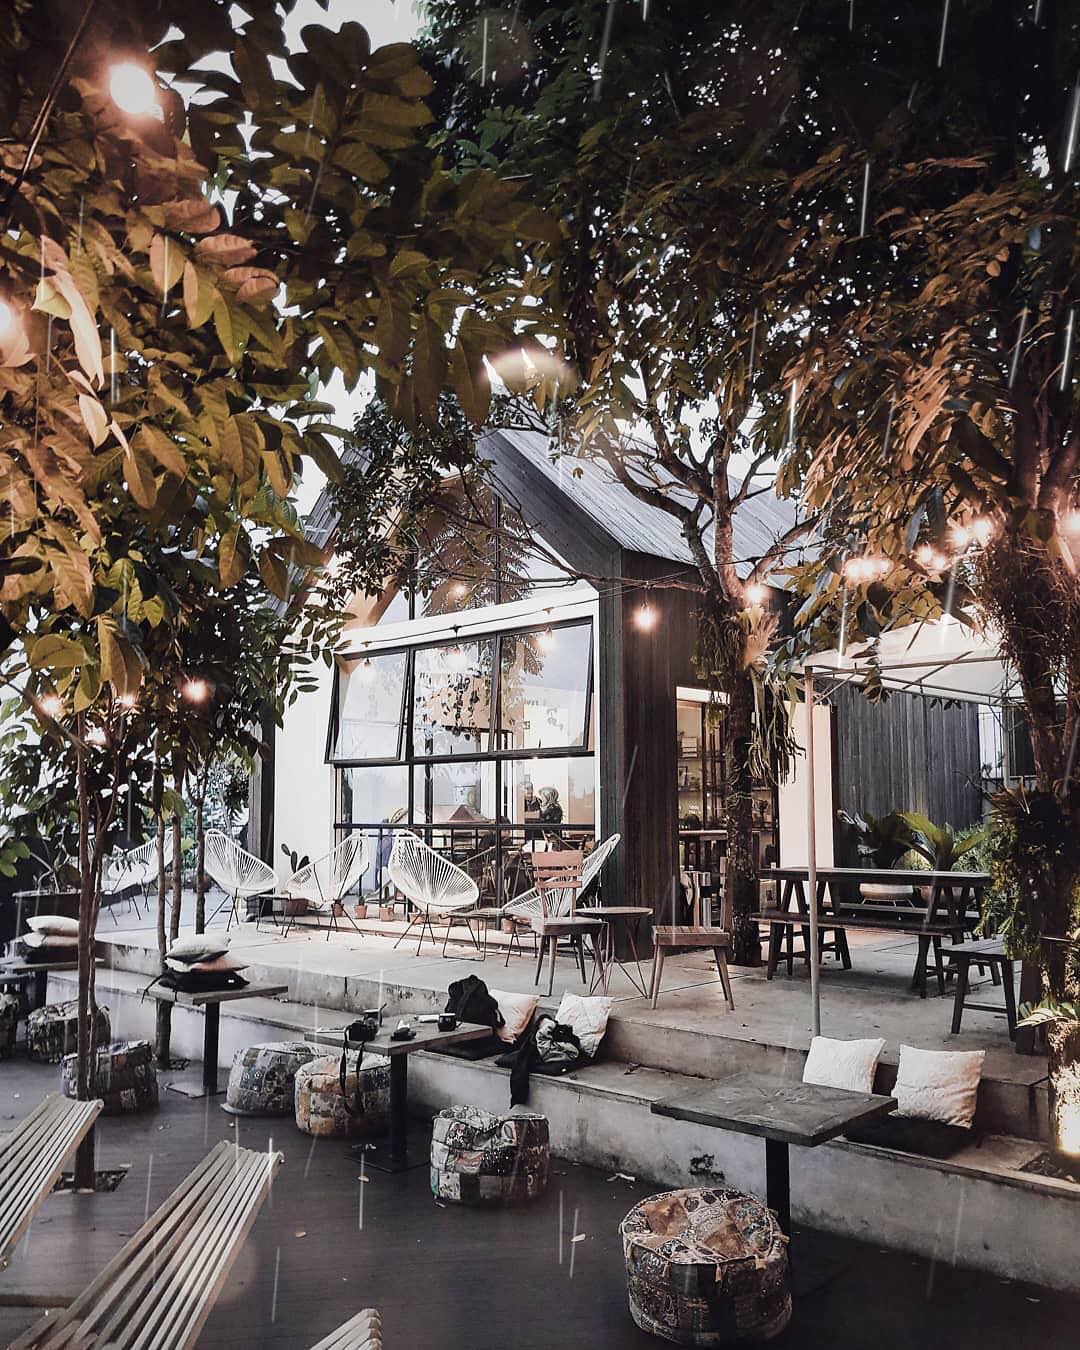 Review Halojae Cafe Bandung Image From @halojae